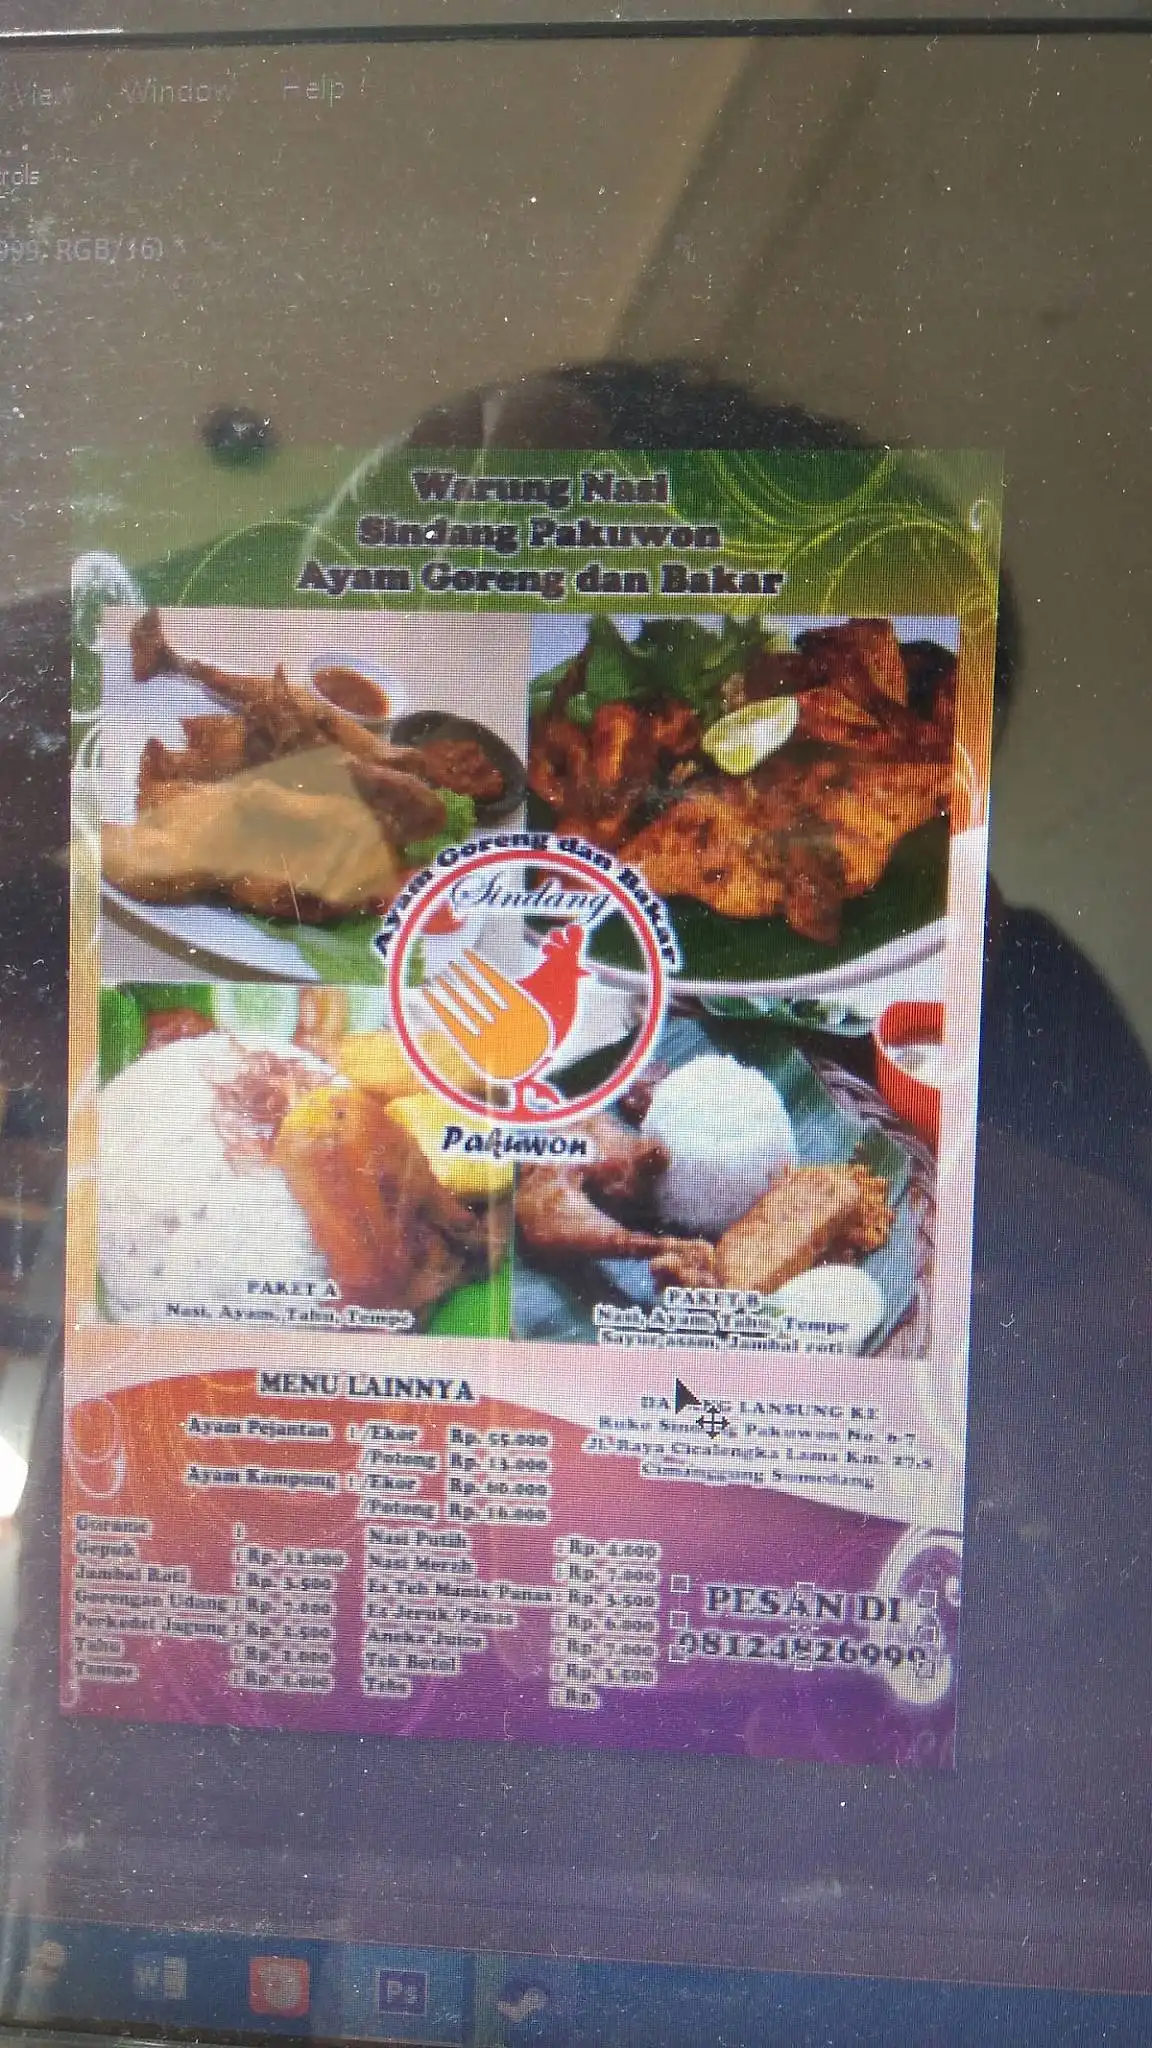 Warung Nasi Sindang Pakuon ( Ayam Goreng & Bakar )